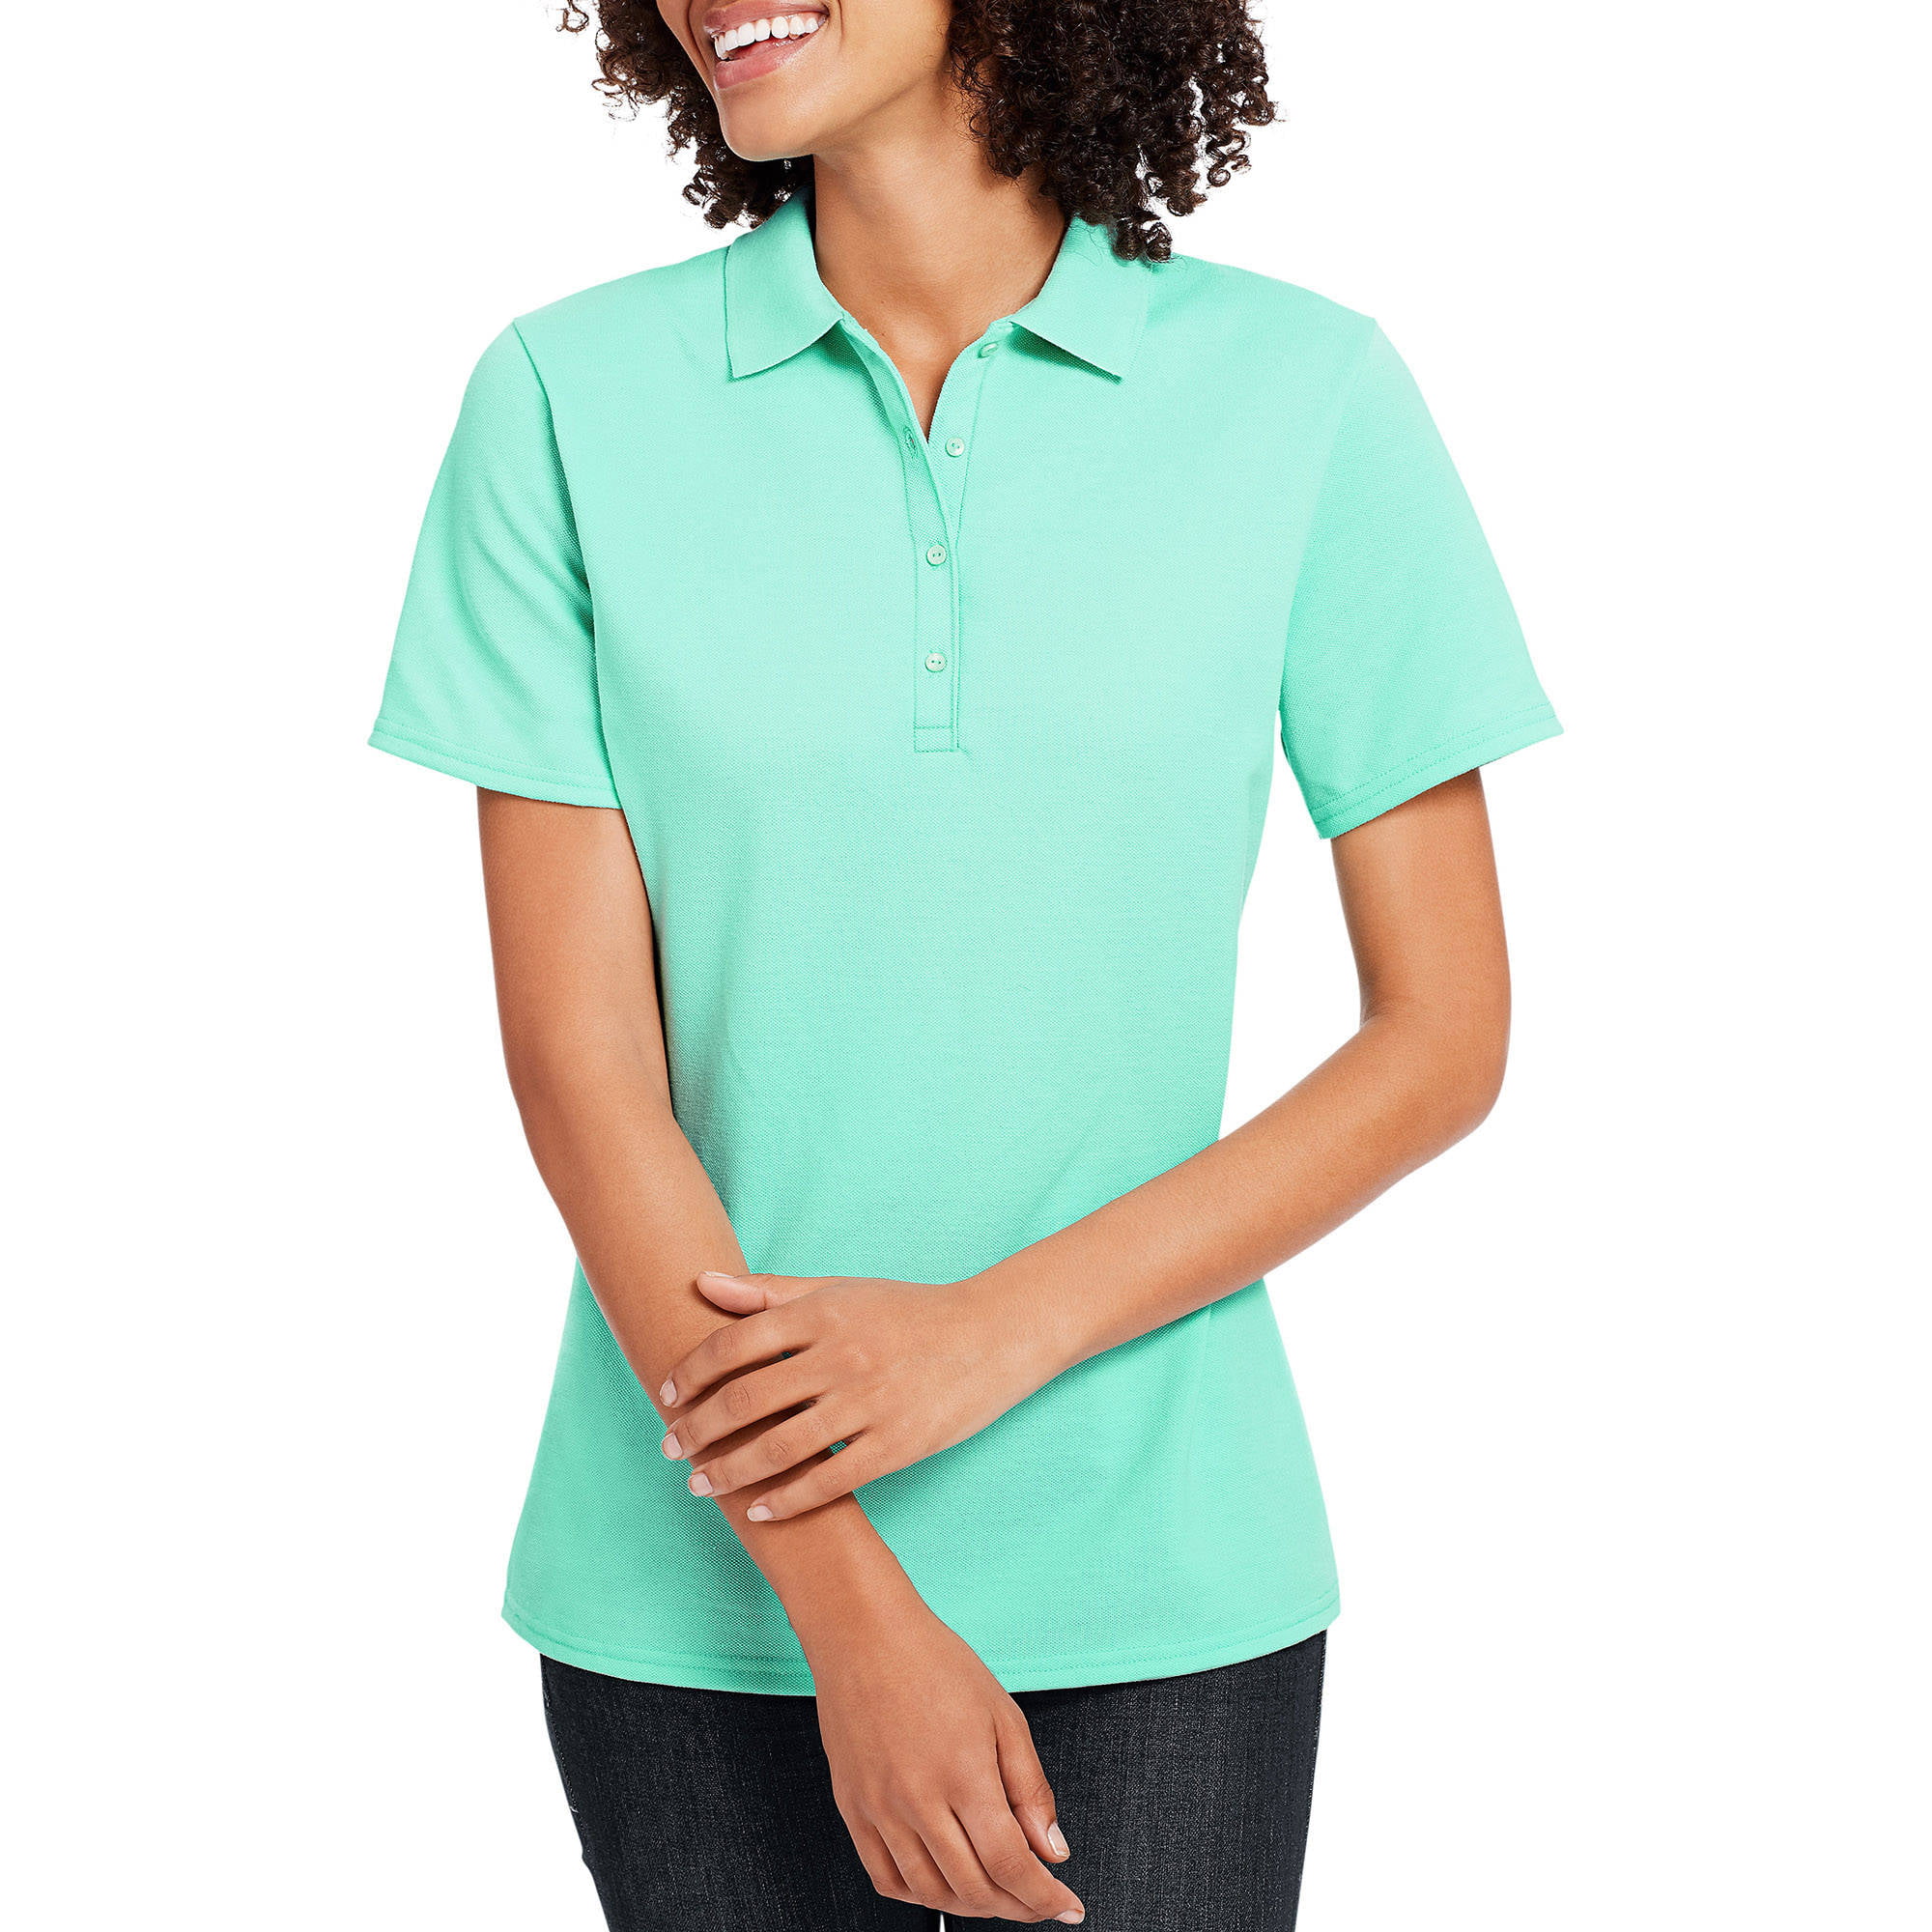 New Ladies Polo Shirt Womens Short Sleeve Plain Pique Classic Summer Top T Shirt